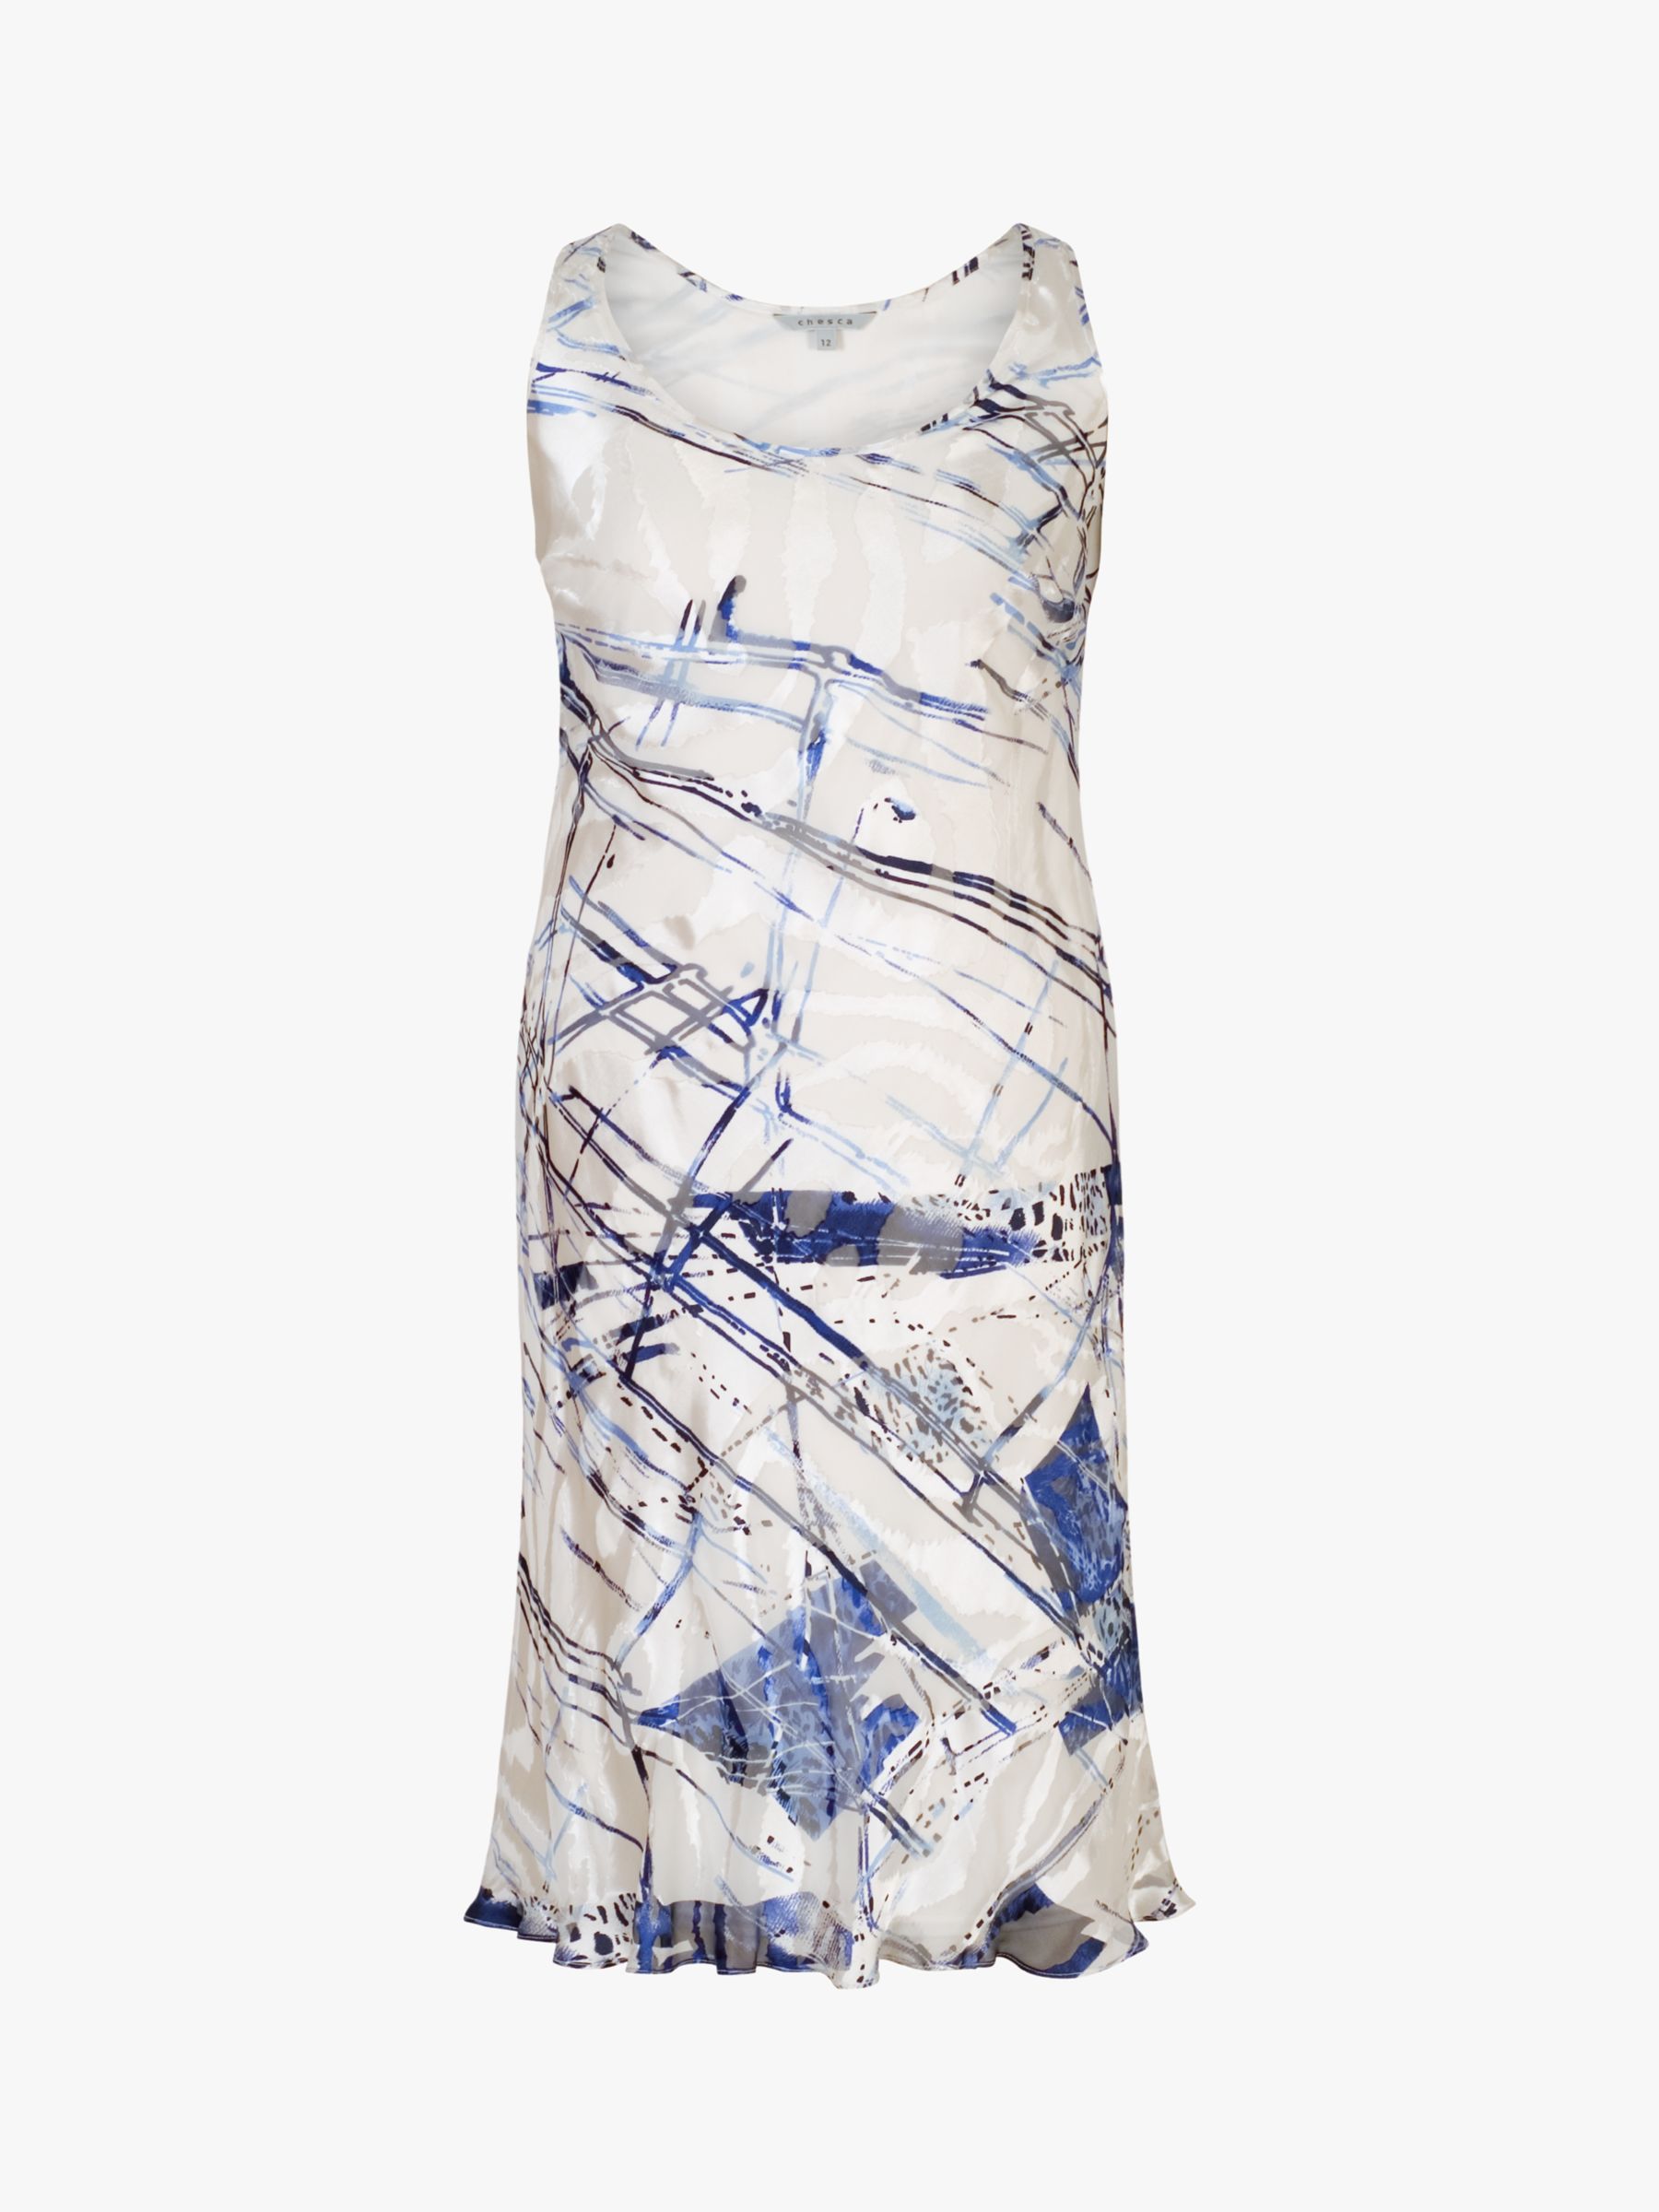 chesca Satin Devoree Abstract Stripe Sleeveless Dress, Ivory/Cobalt, 14